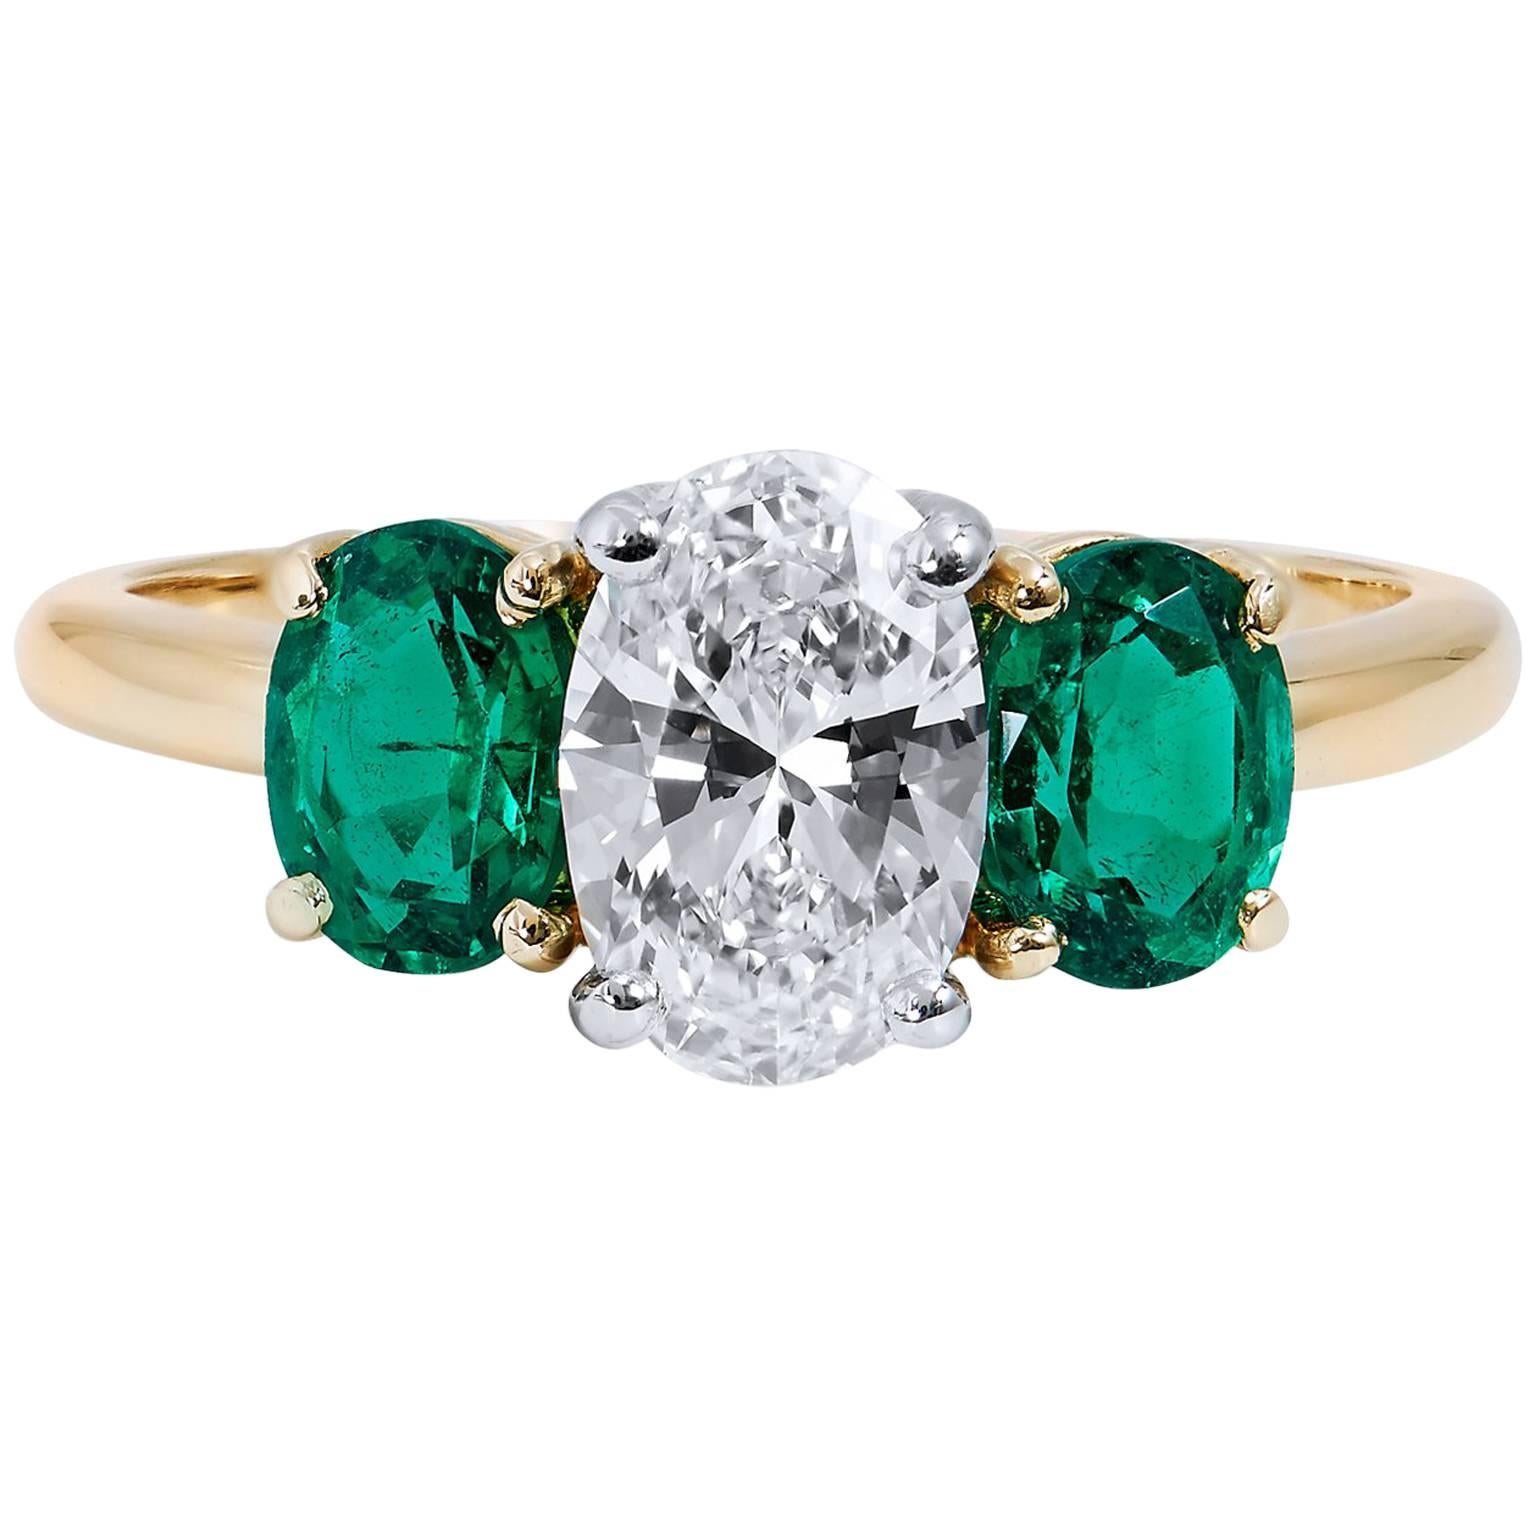 Tiffany & Co. Three Oval Emerald Diamond Ring